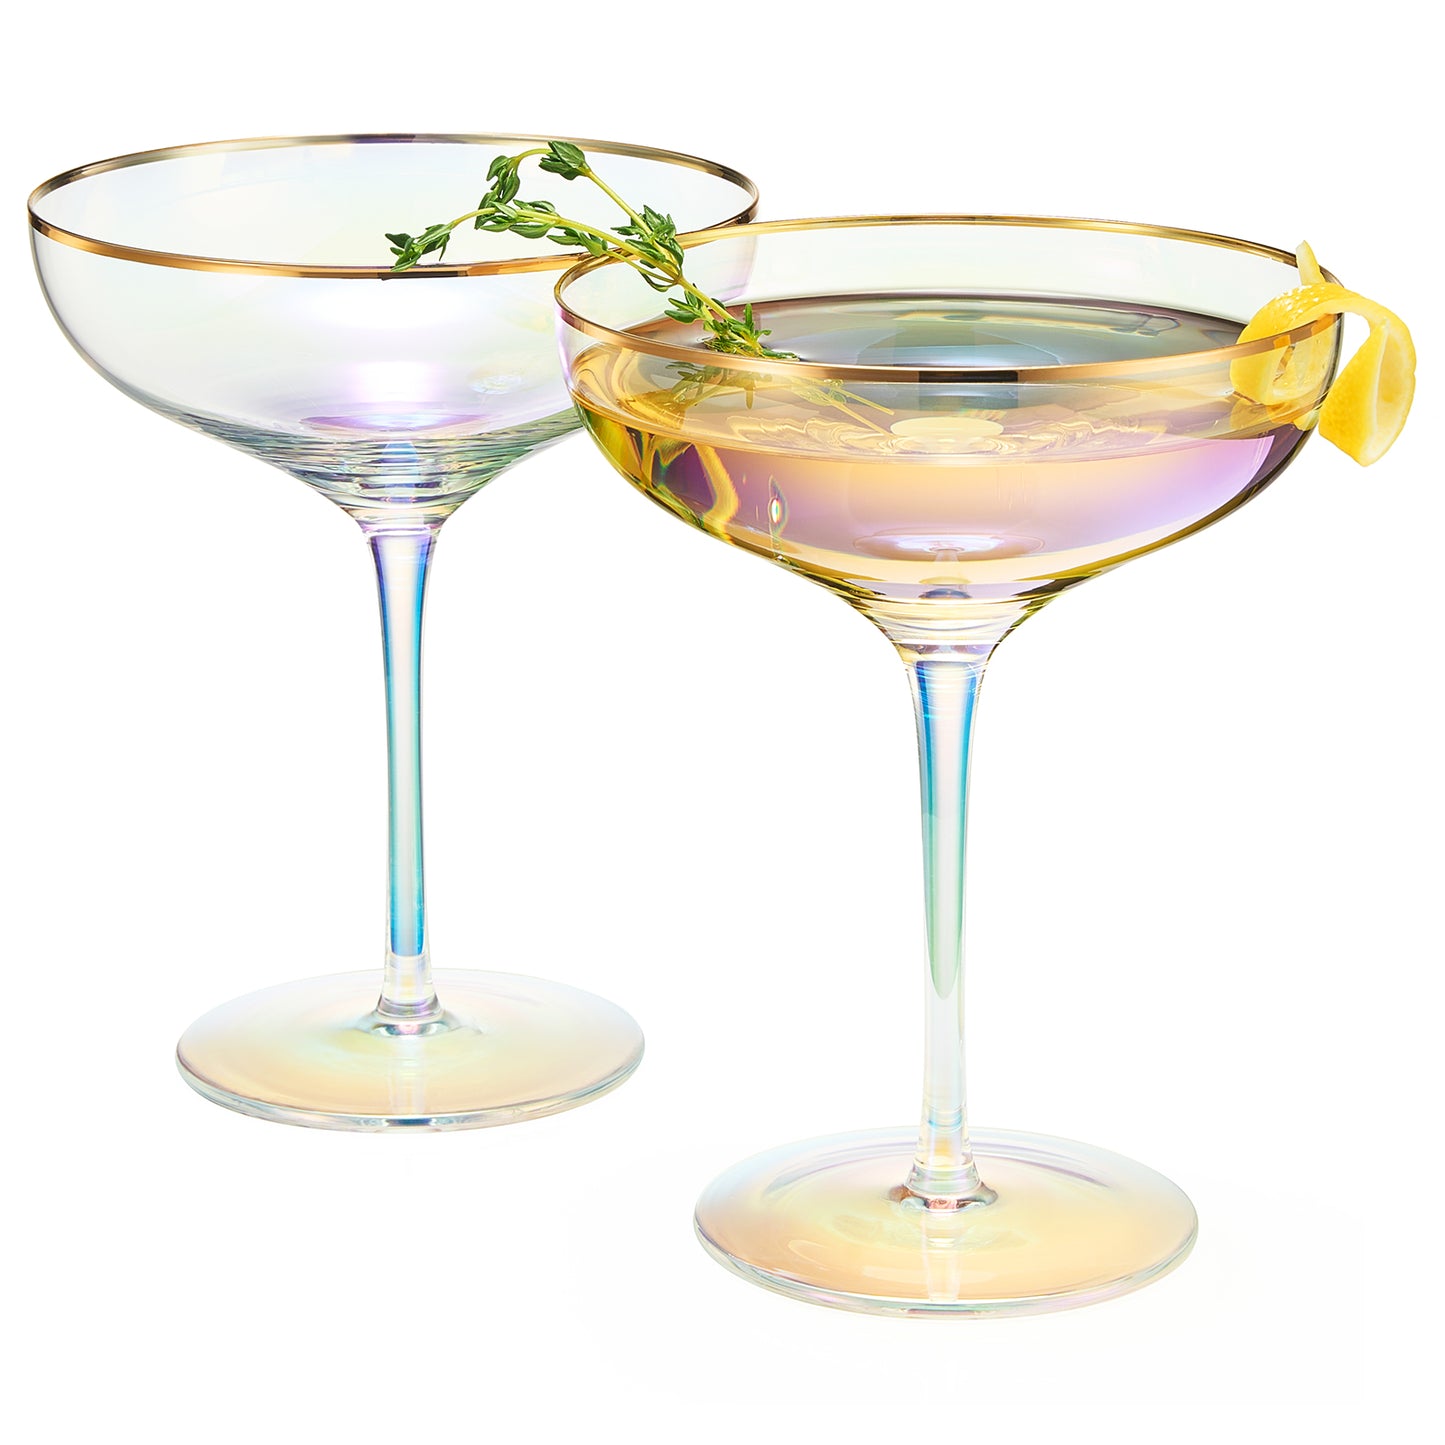 Palazzo Coupe Cocktail Glassware, Set of 2, Iridescent